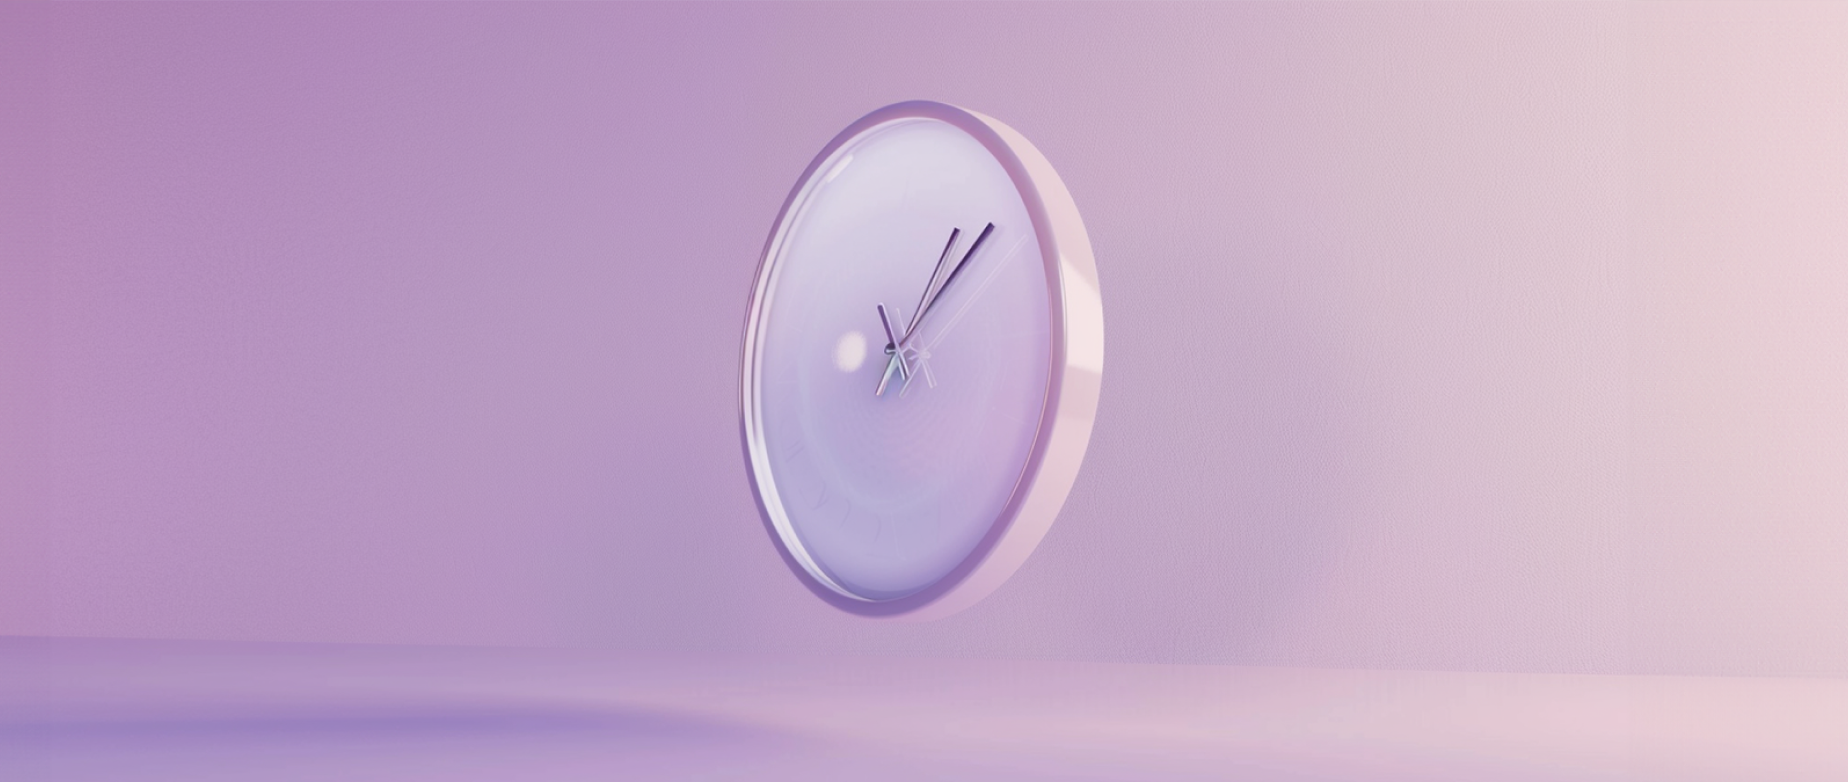 A clock on a light pink background.